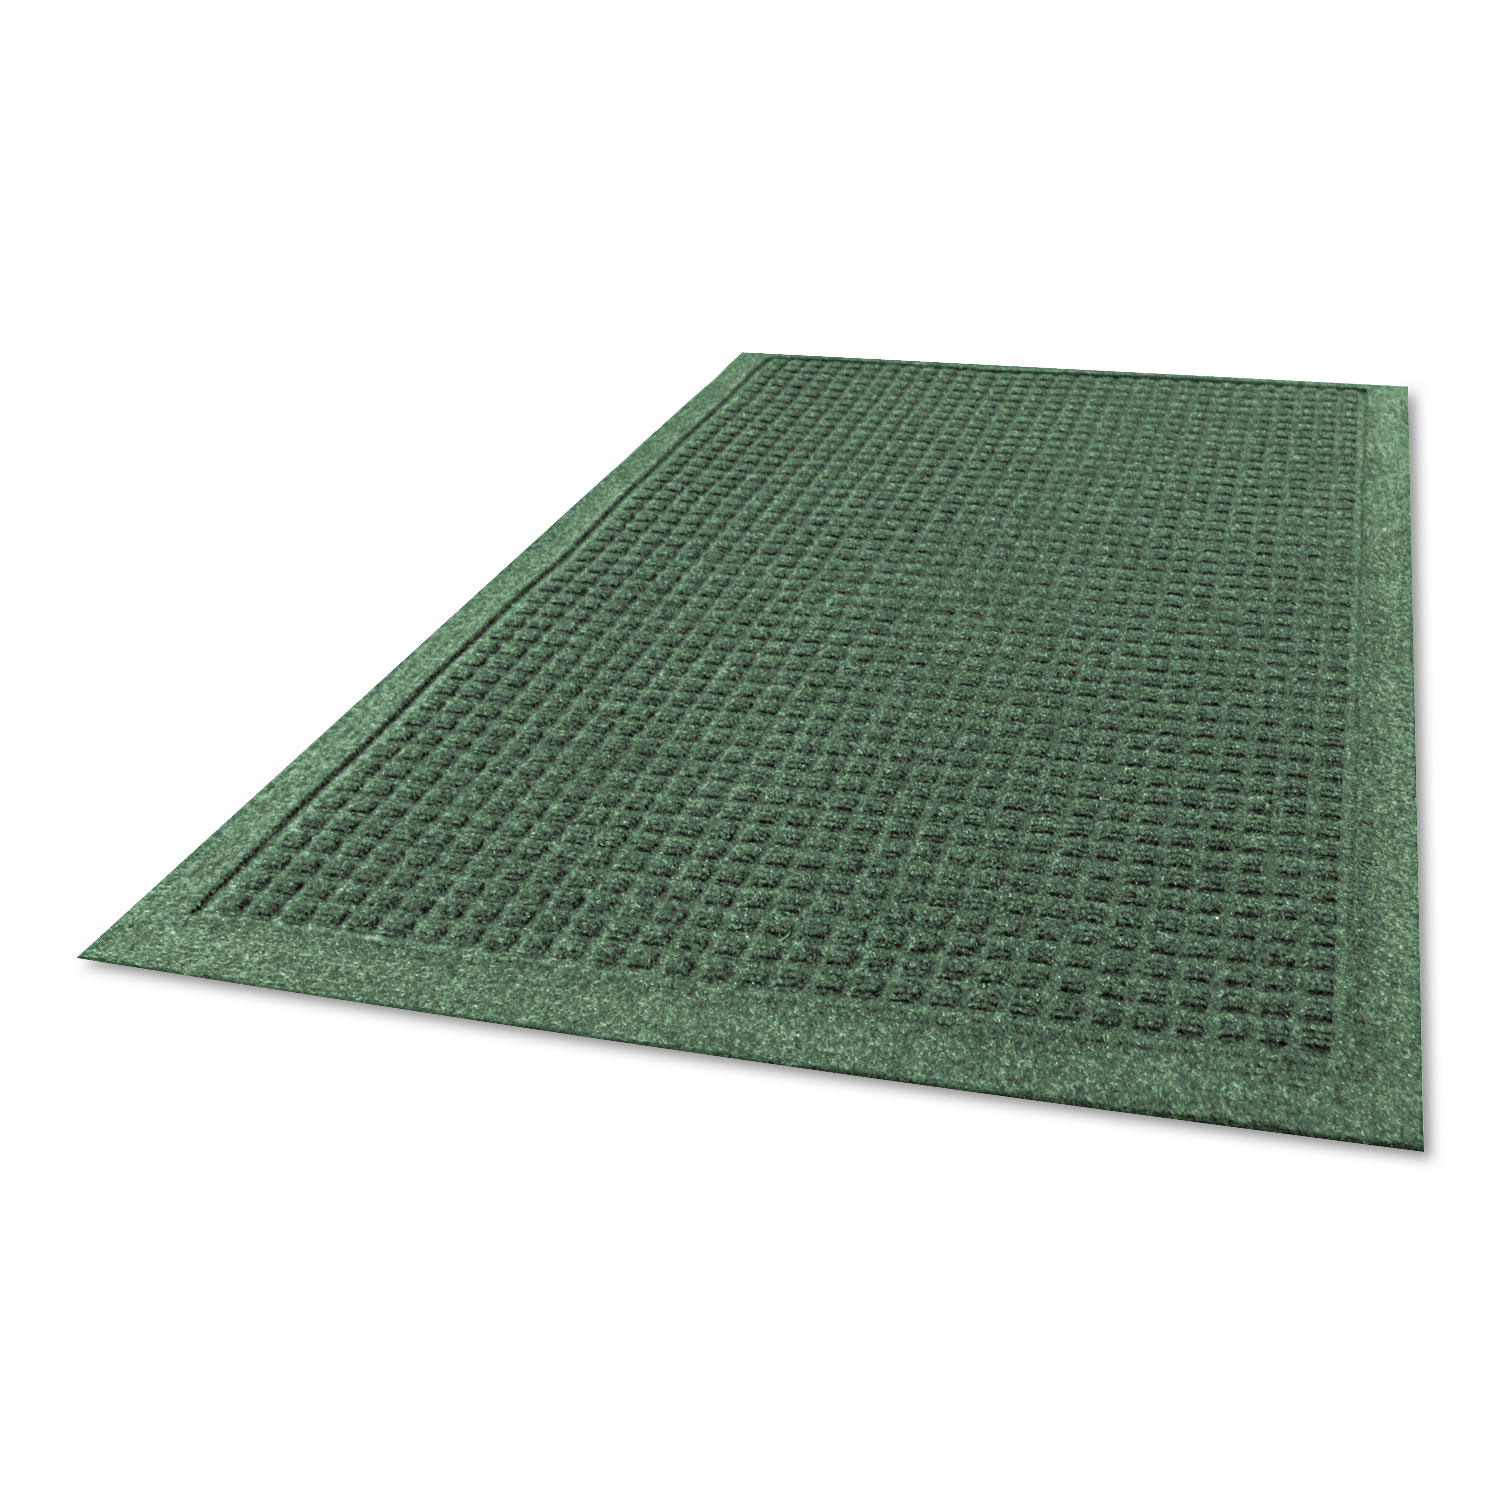  Guardian EG030504 EcoGuard Indoor/Outdoor Wiper Mat, Rubber, 36 x 60, Charcoal (MLLEG030504) 